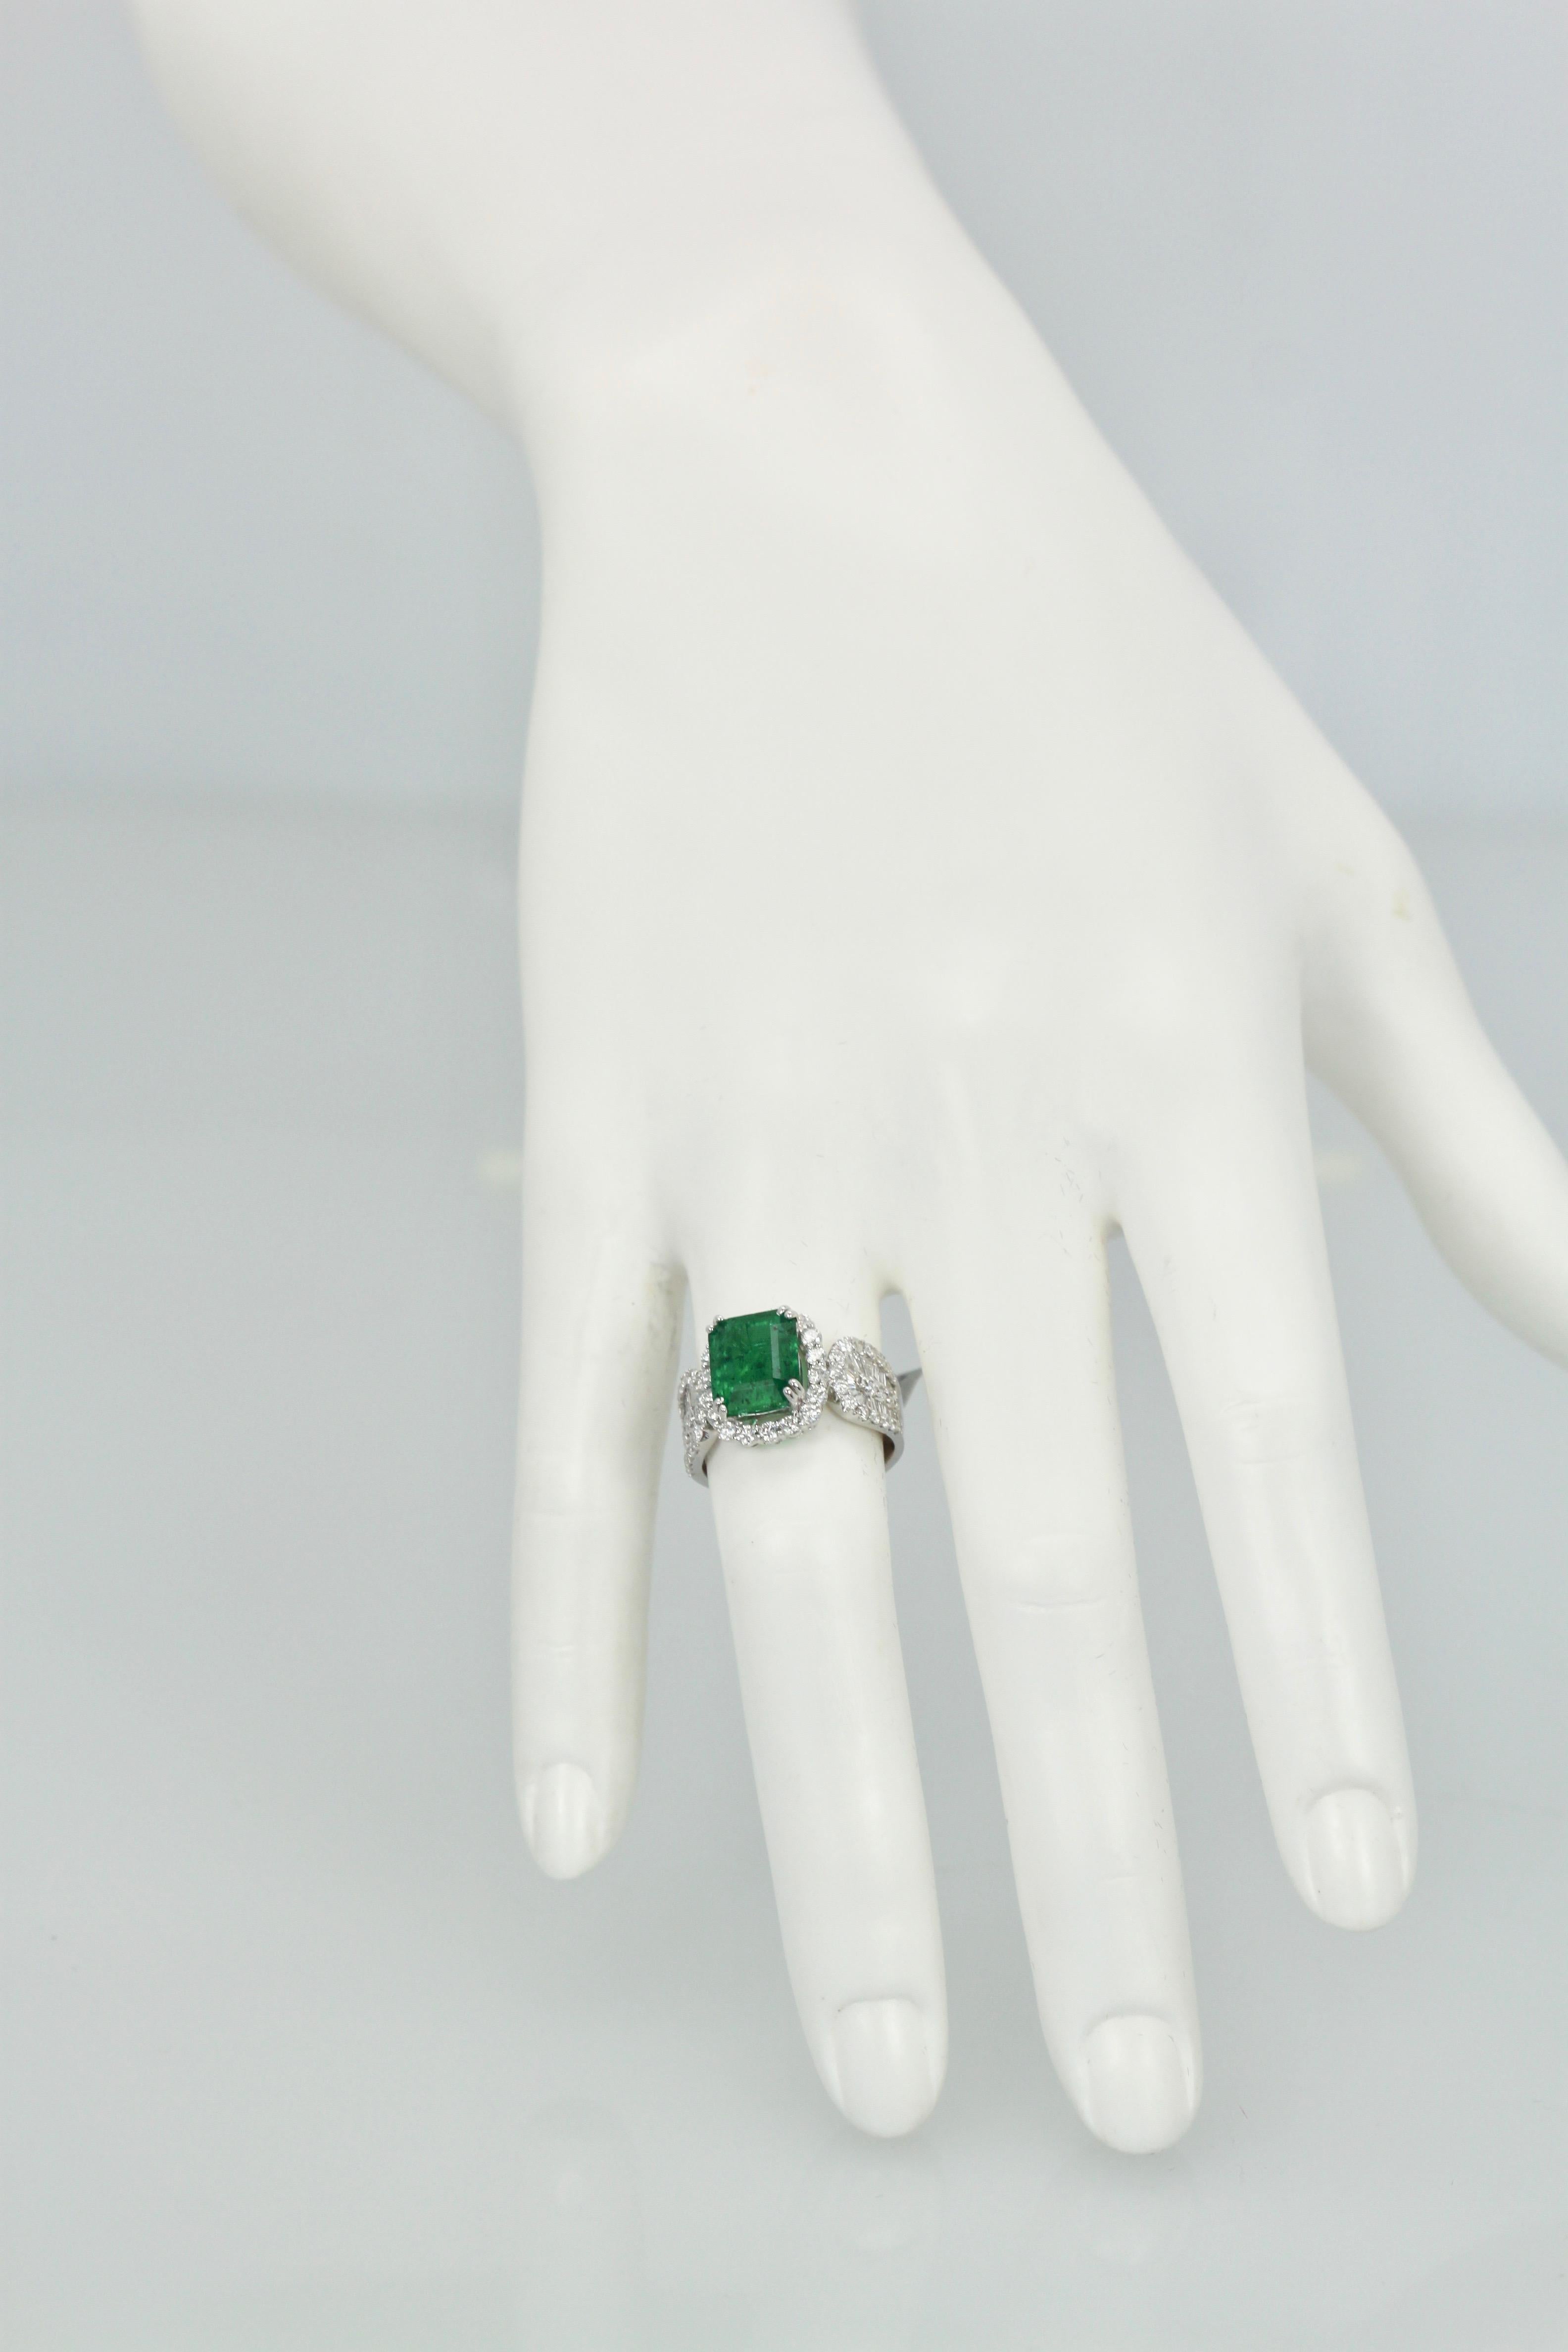 Cushion Cut Emerald Diamond Ring 18 Karat